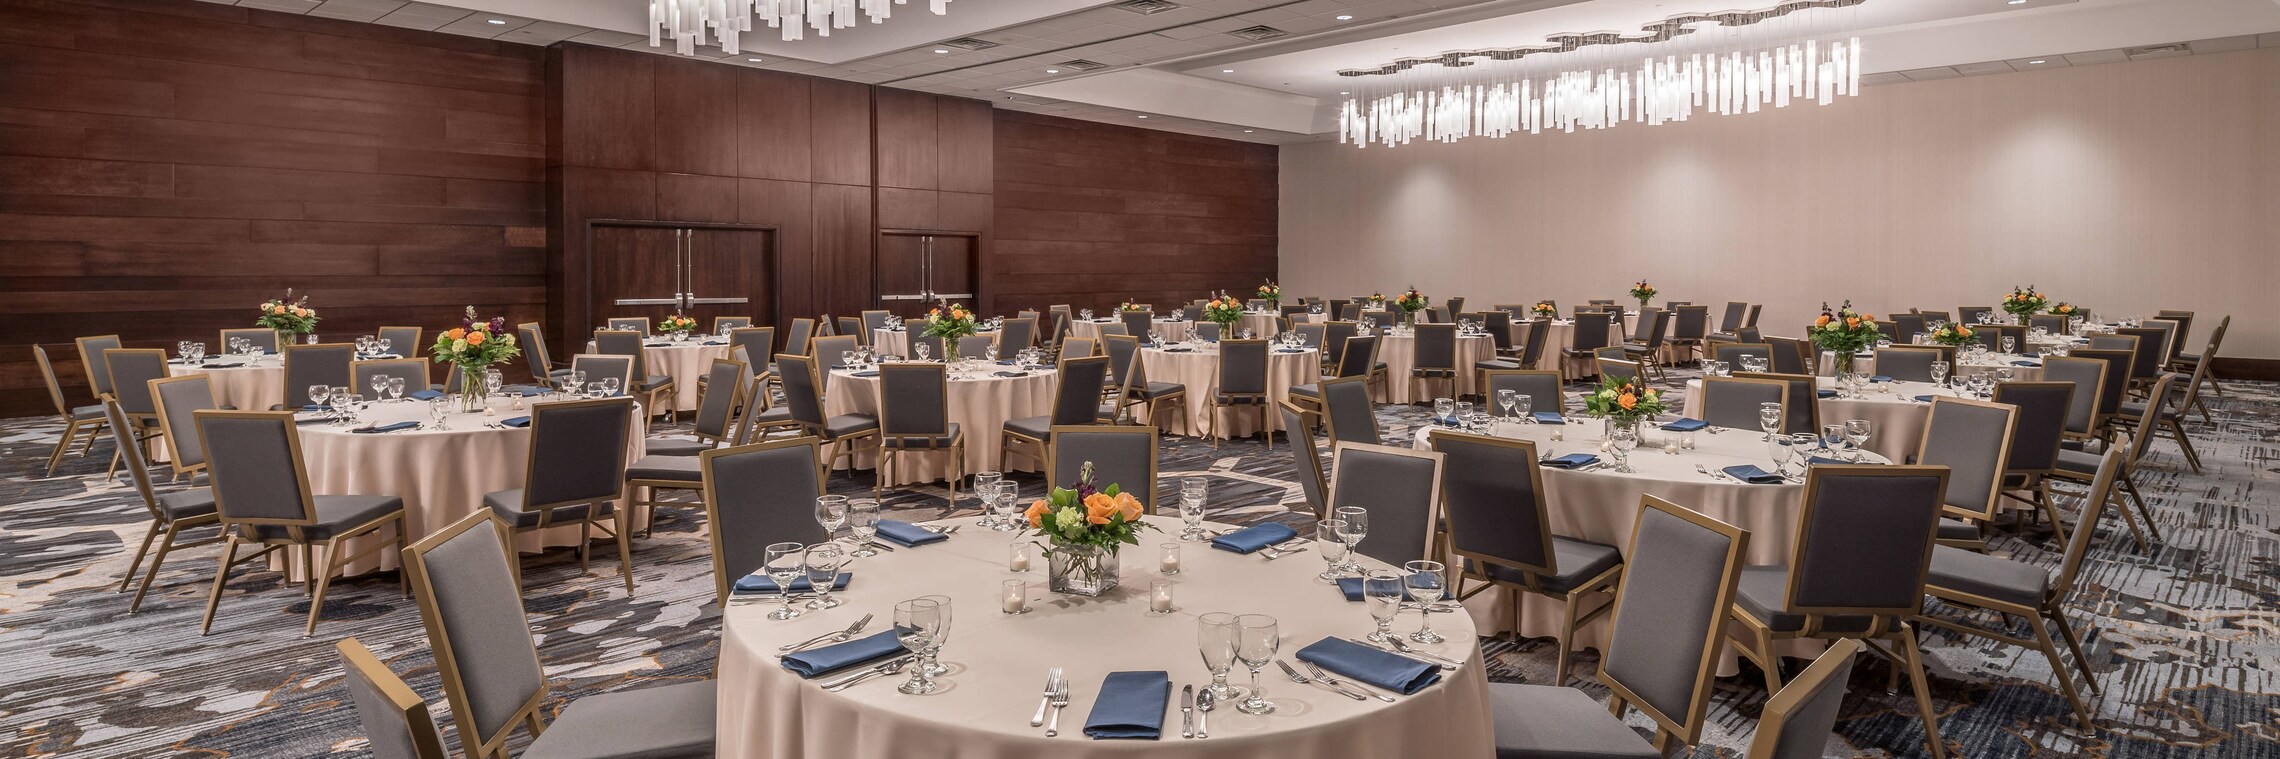 Grand Ballroom - Banquet Setup